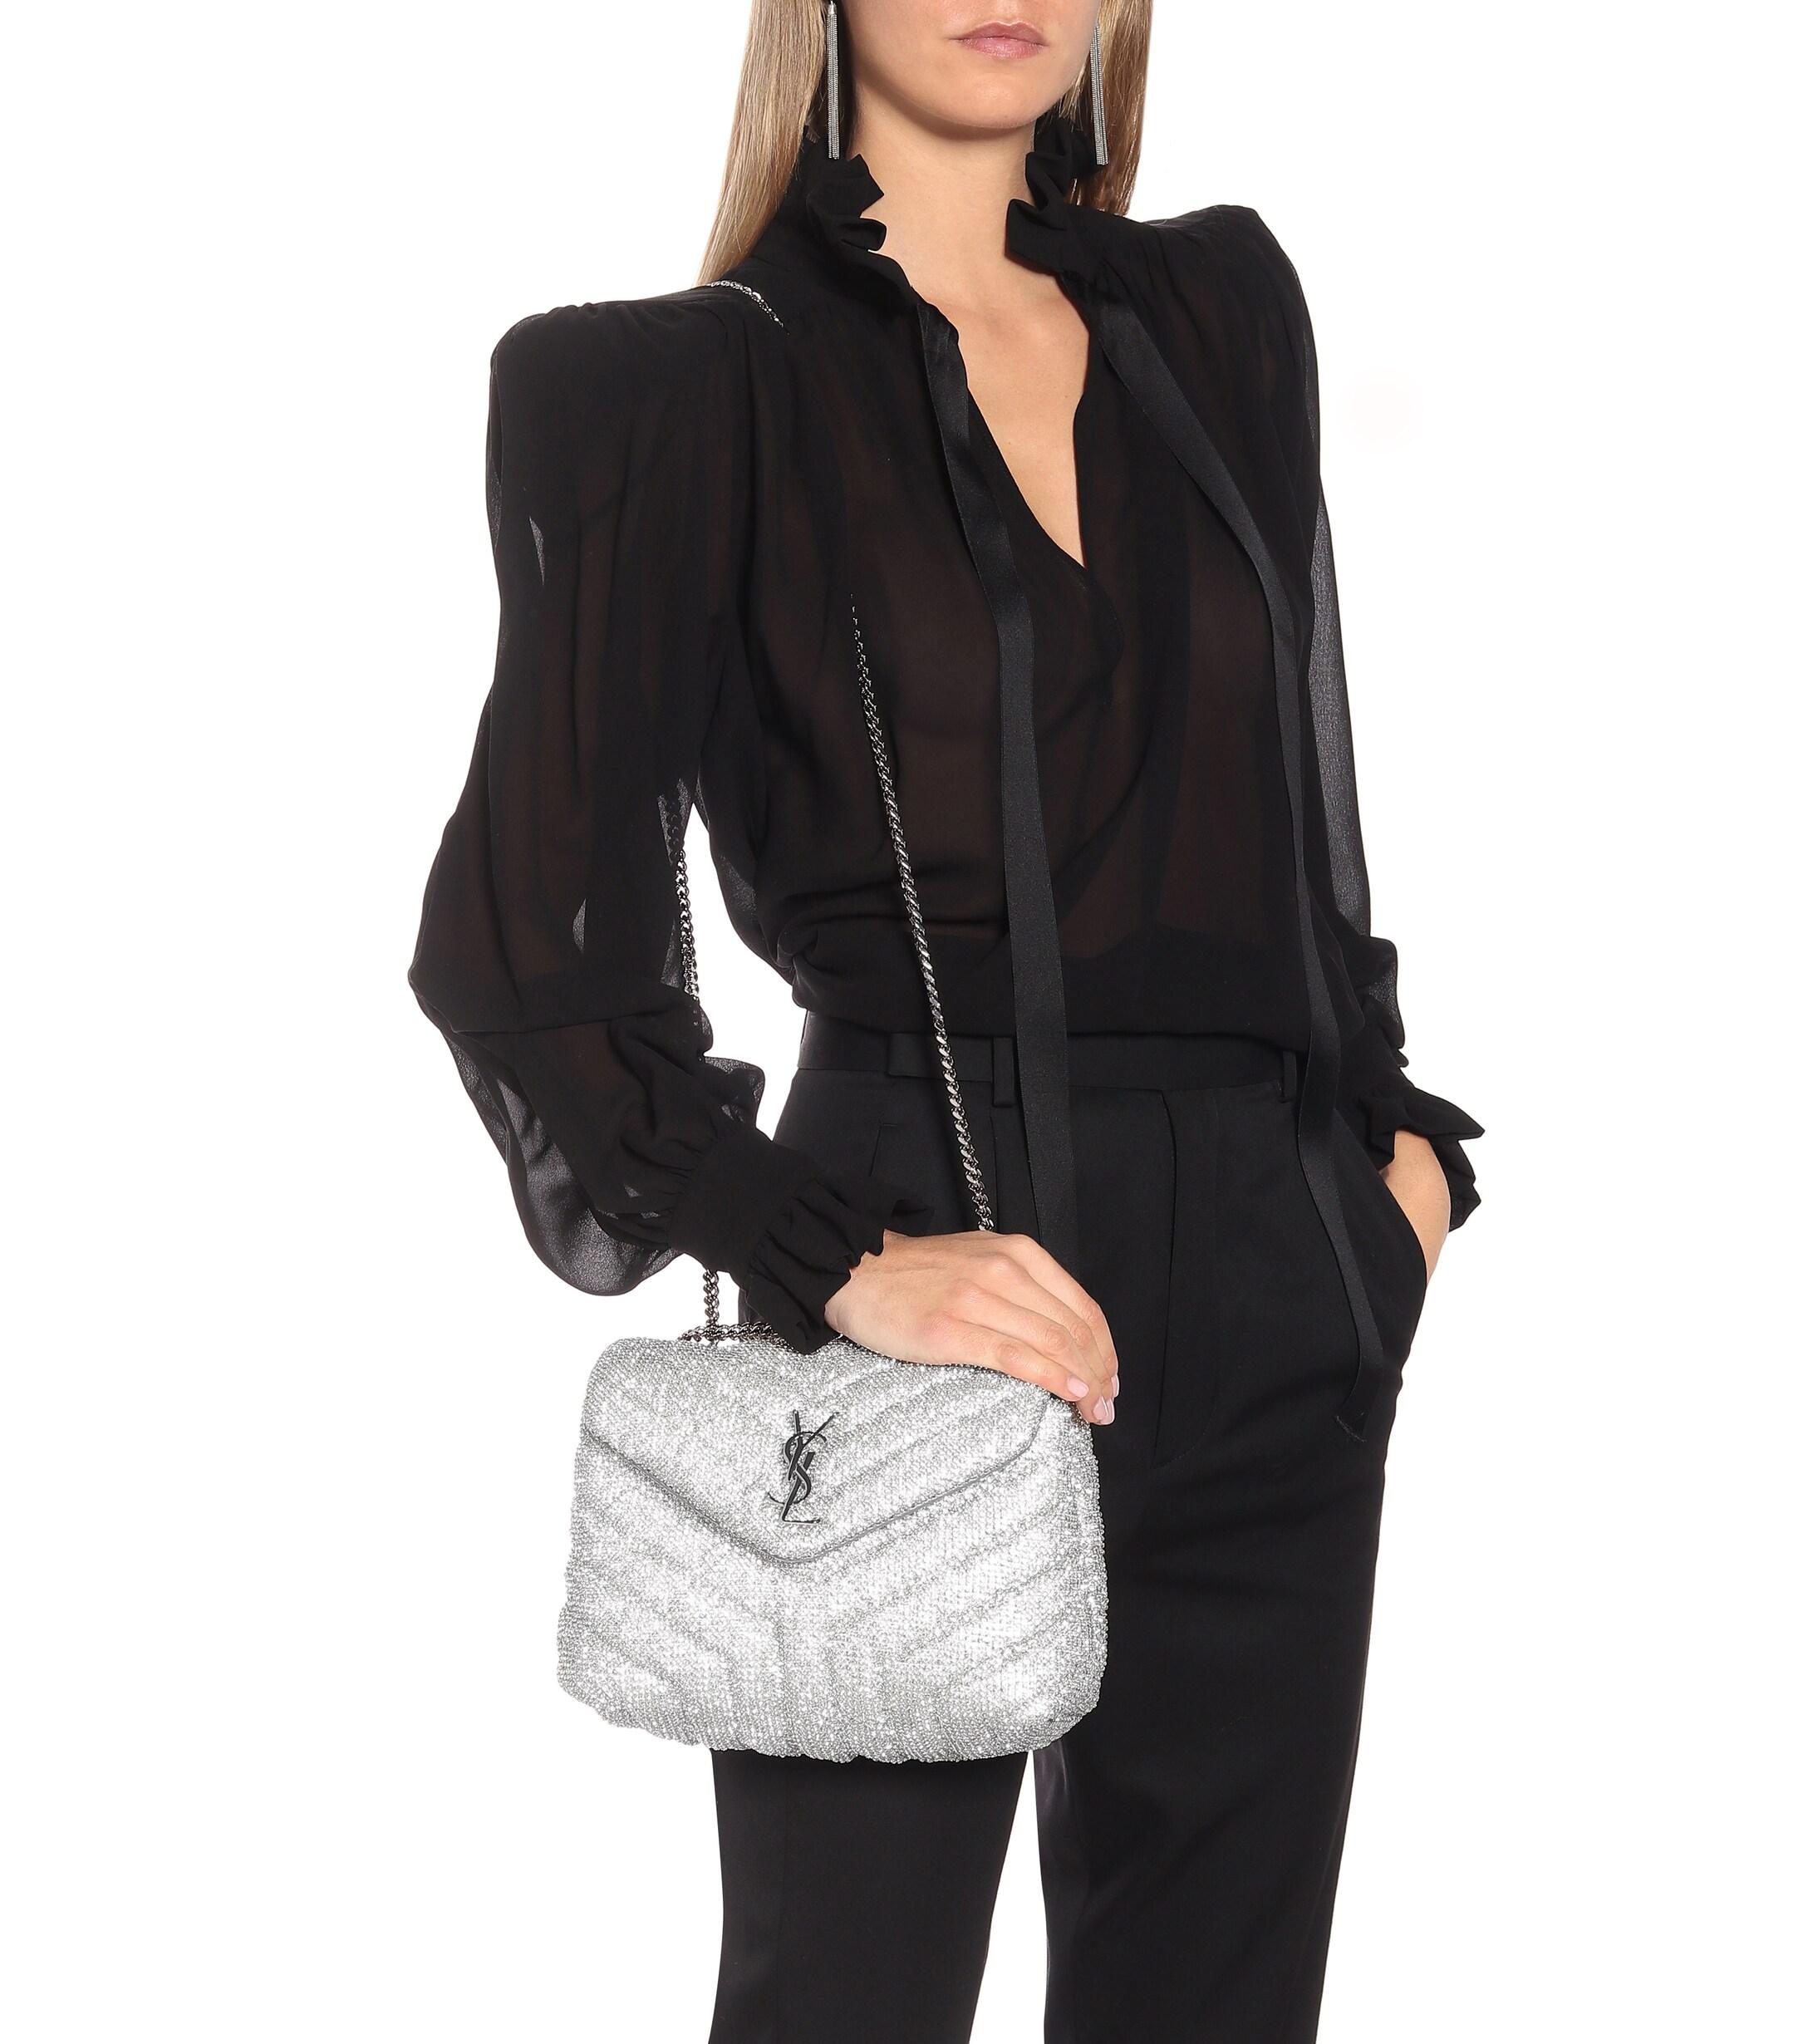 Saint Laurent Loulou Small Leather Shoulder Bag - White